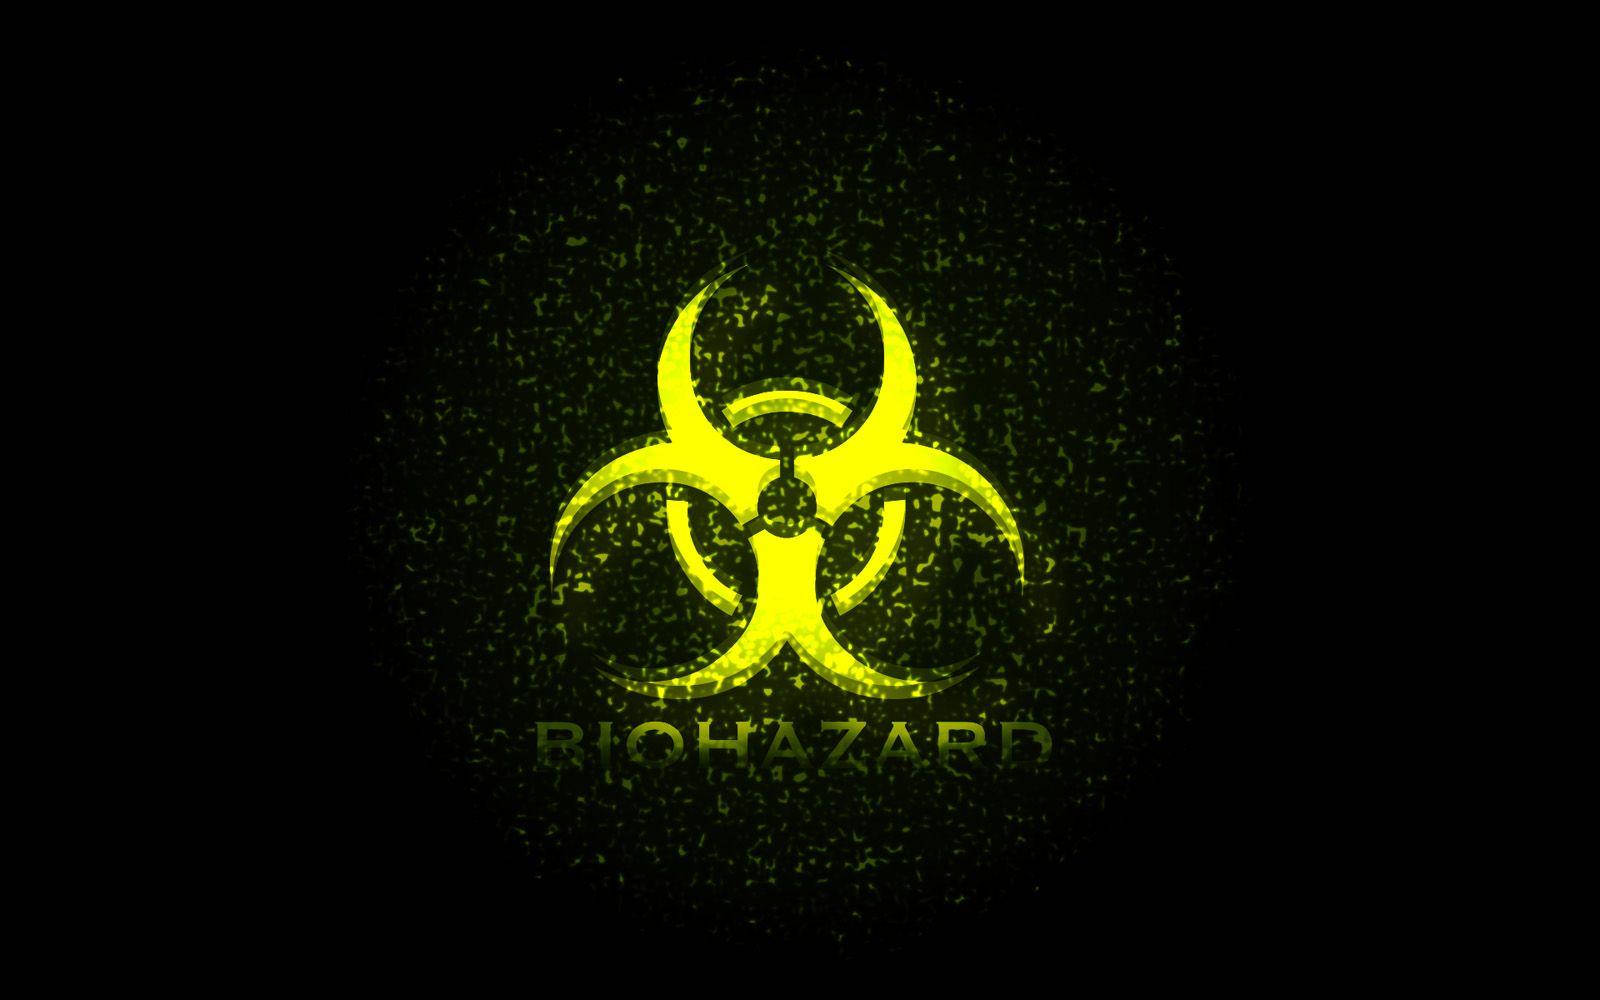 Gul Biohazard Logo Wallpaper